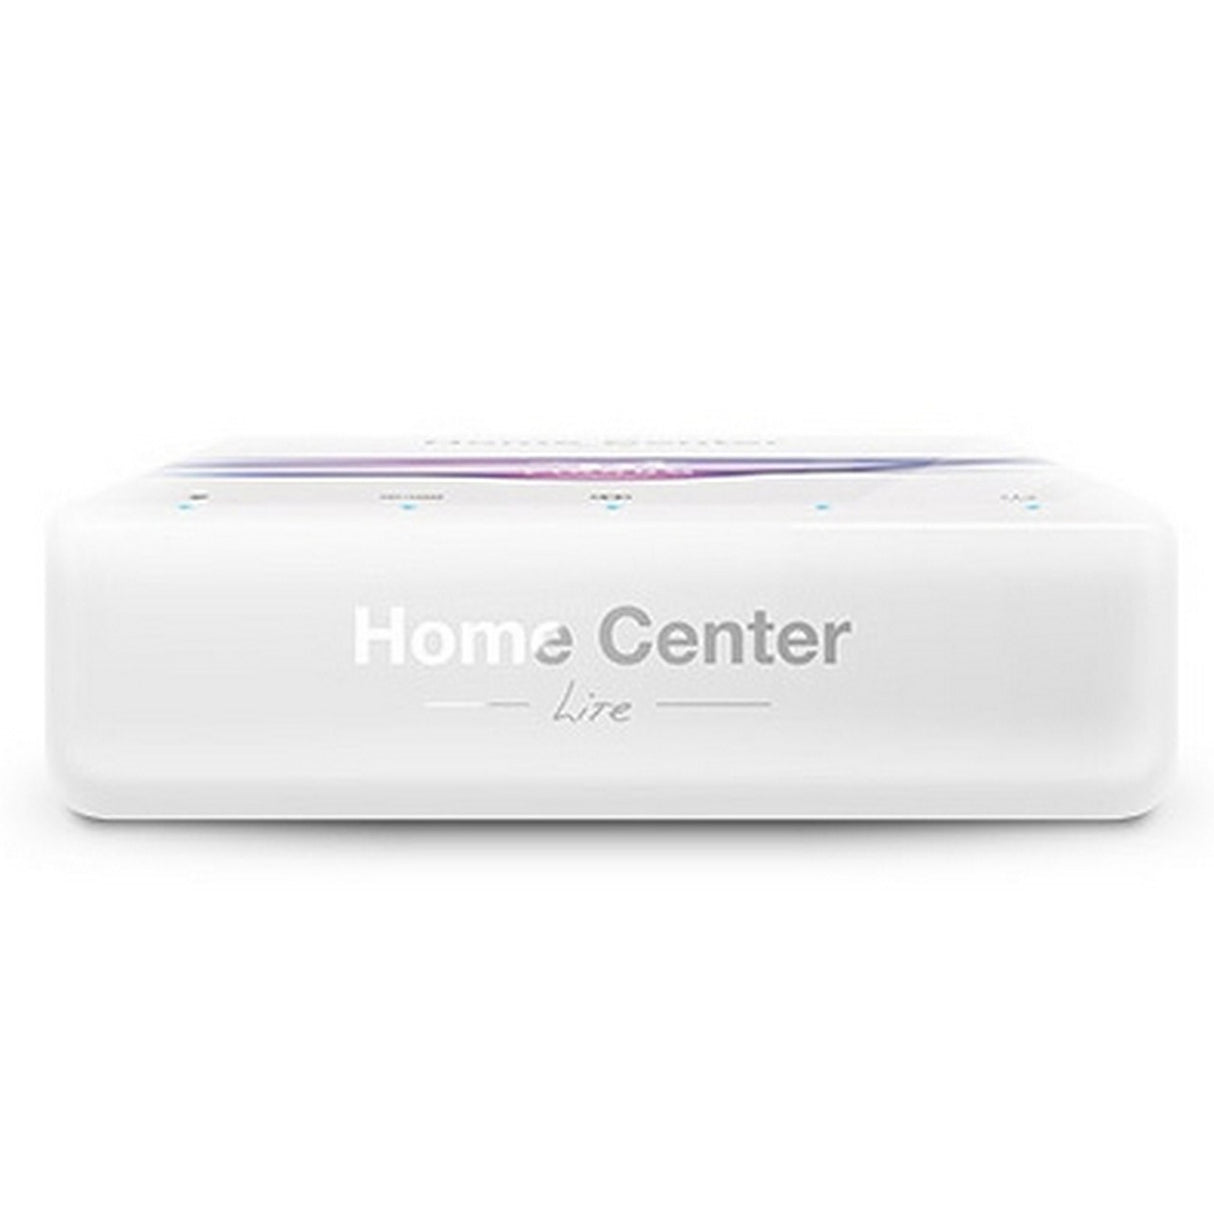 Fibaro Home Center Lite | Z-Wave Smart Home Controller